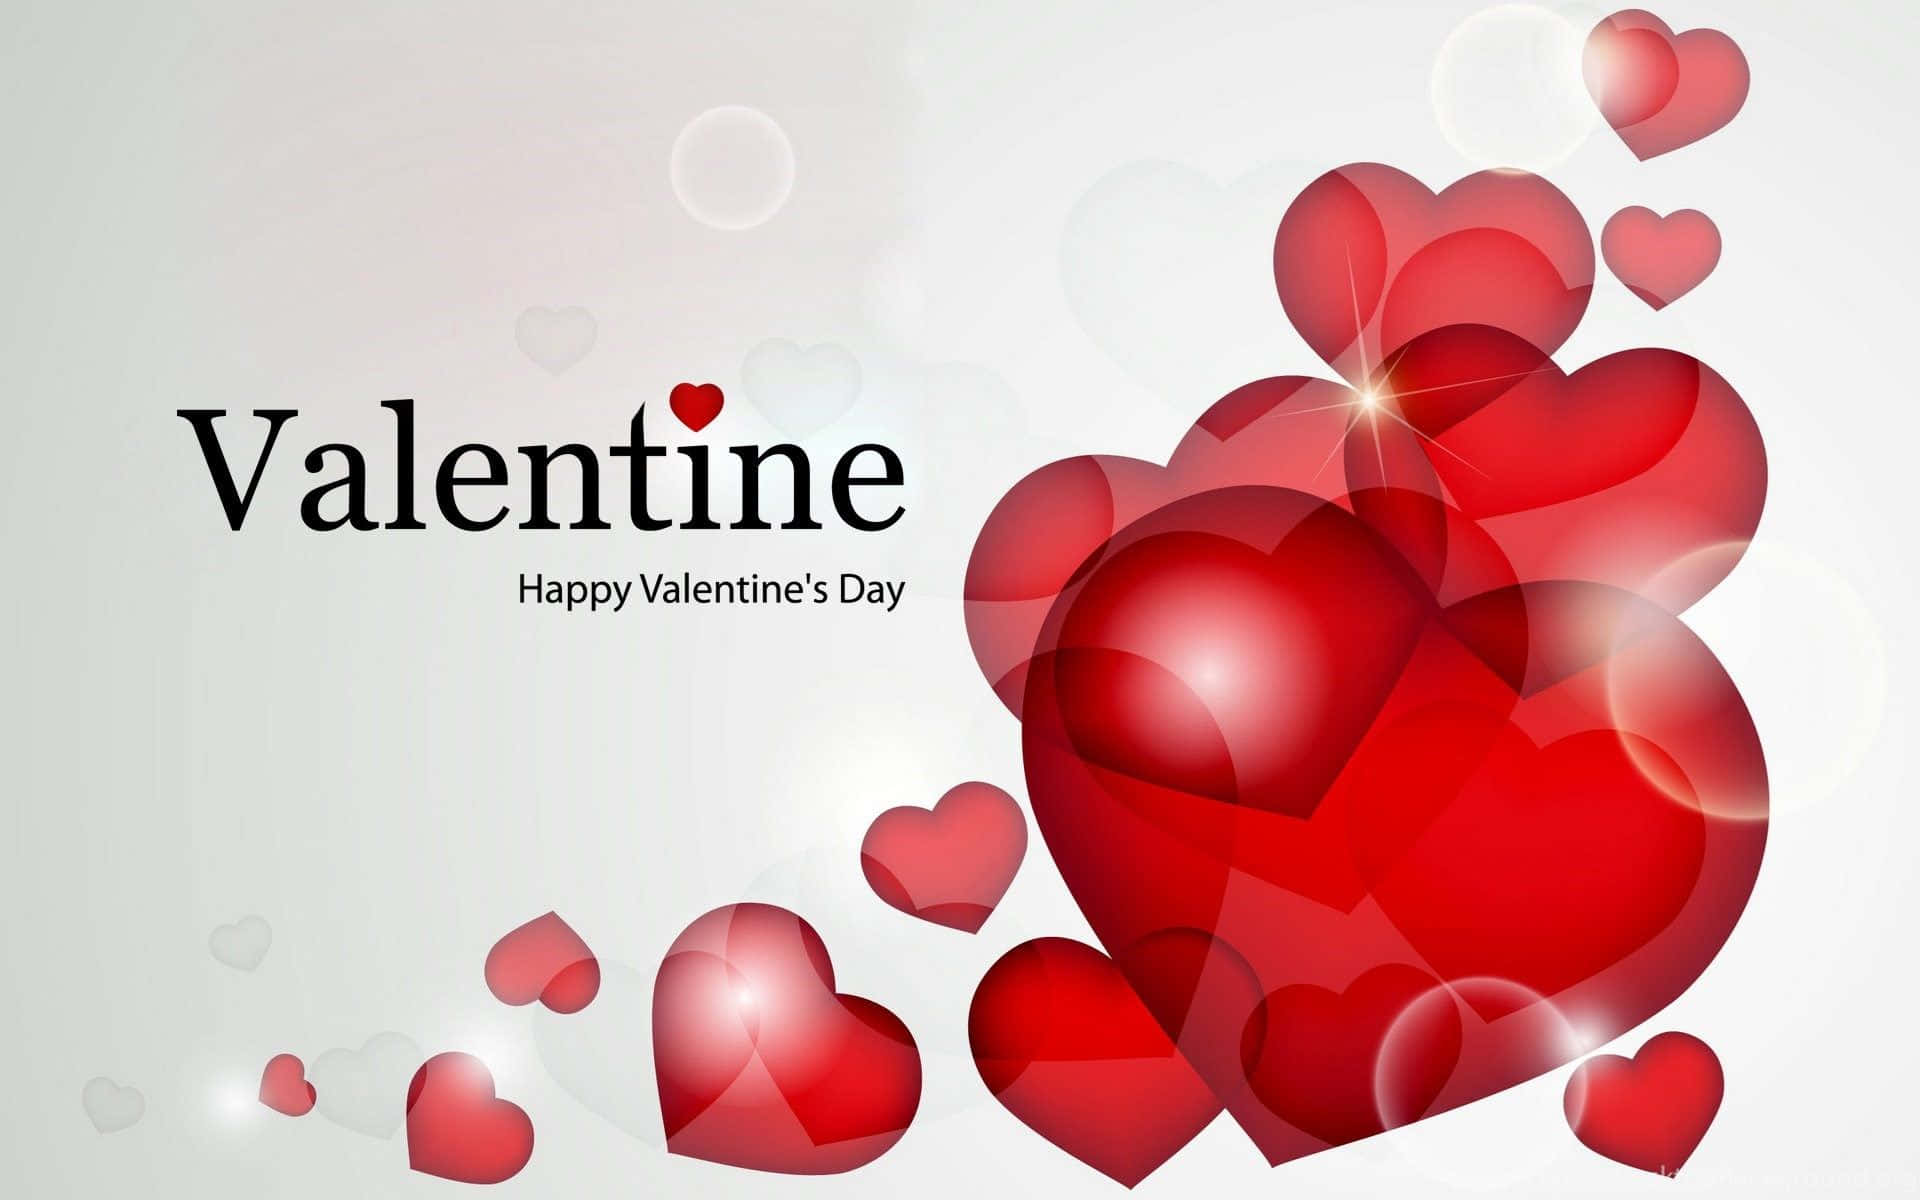 Díade San Valentín: Un Día Para Celebrar A Tu Persona Especial.